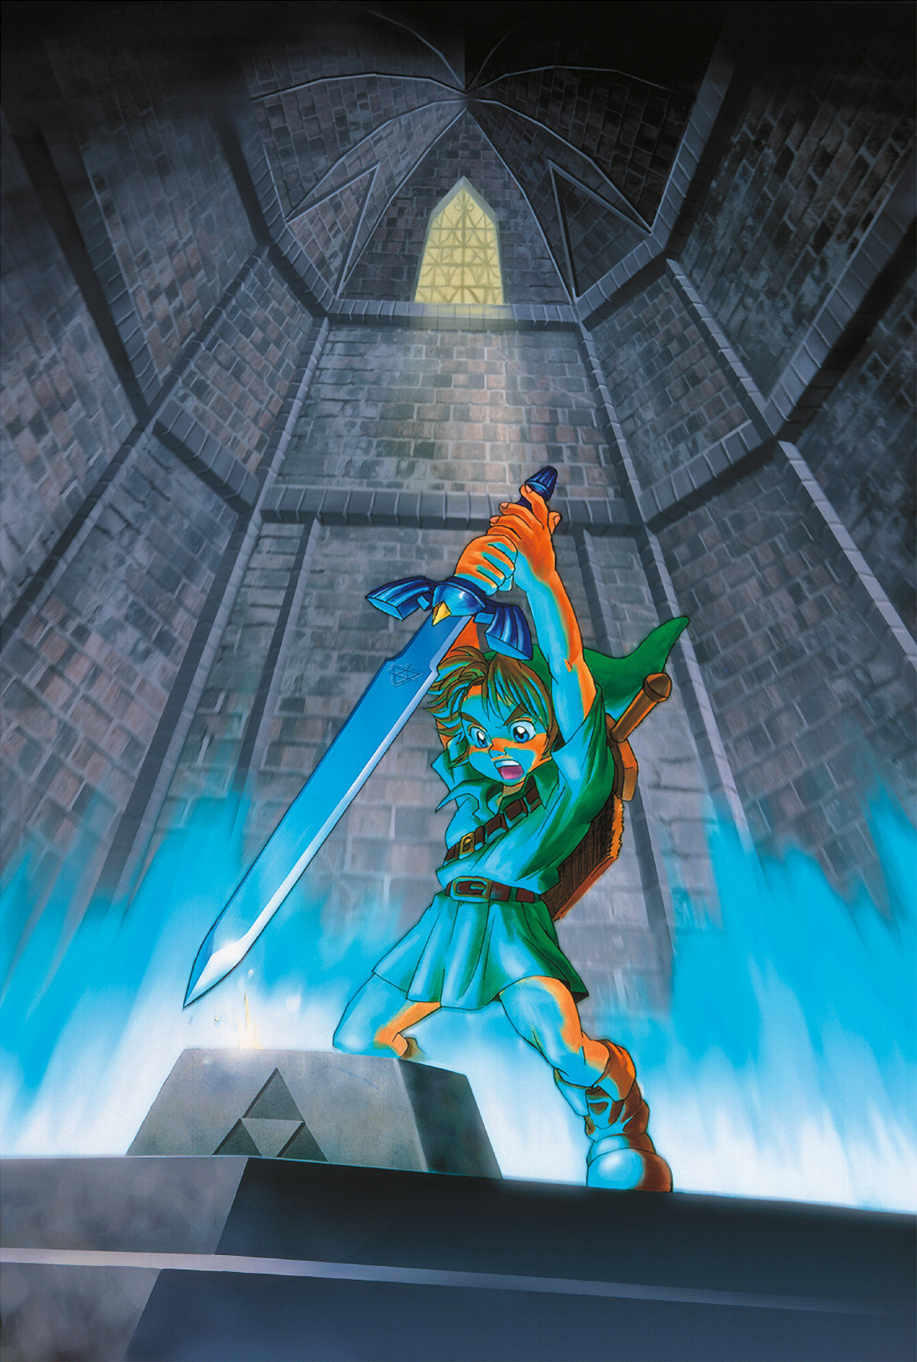 Link (Ocarina of Time) - Zelda Dungeon Wiki, a The Legend of Zelda wiki